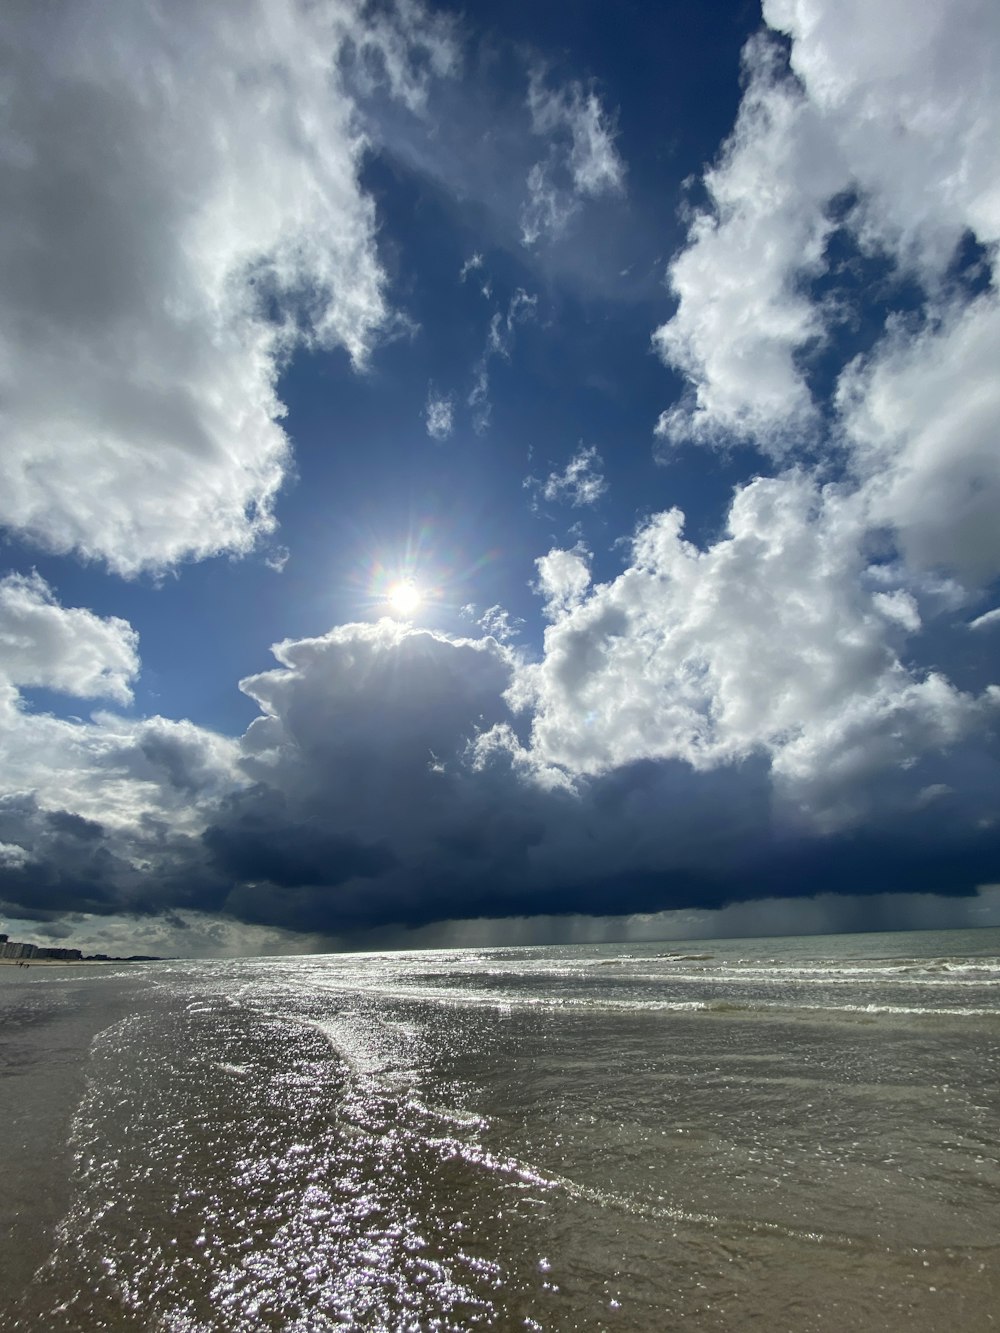 the sun shining through the clouds over a beach